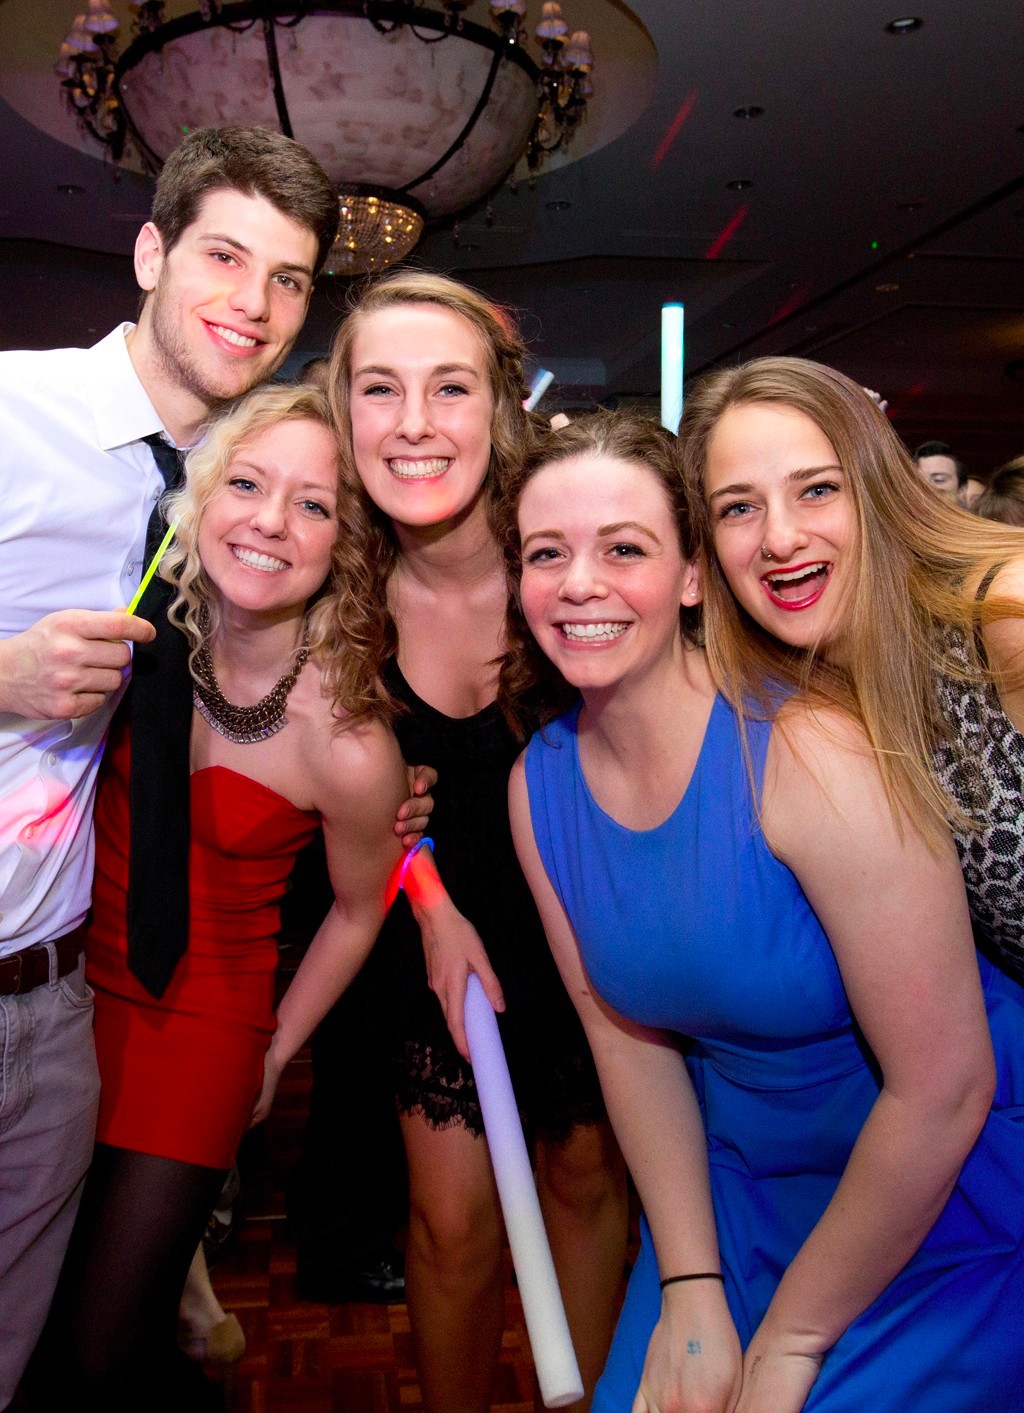 Five students at a formal U N E dance